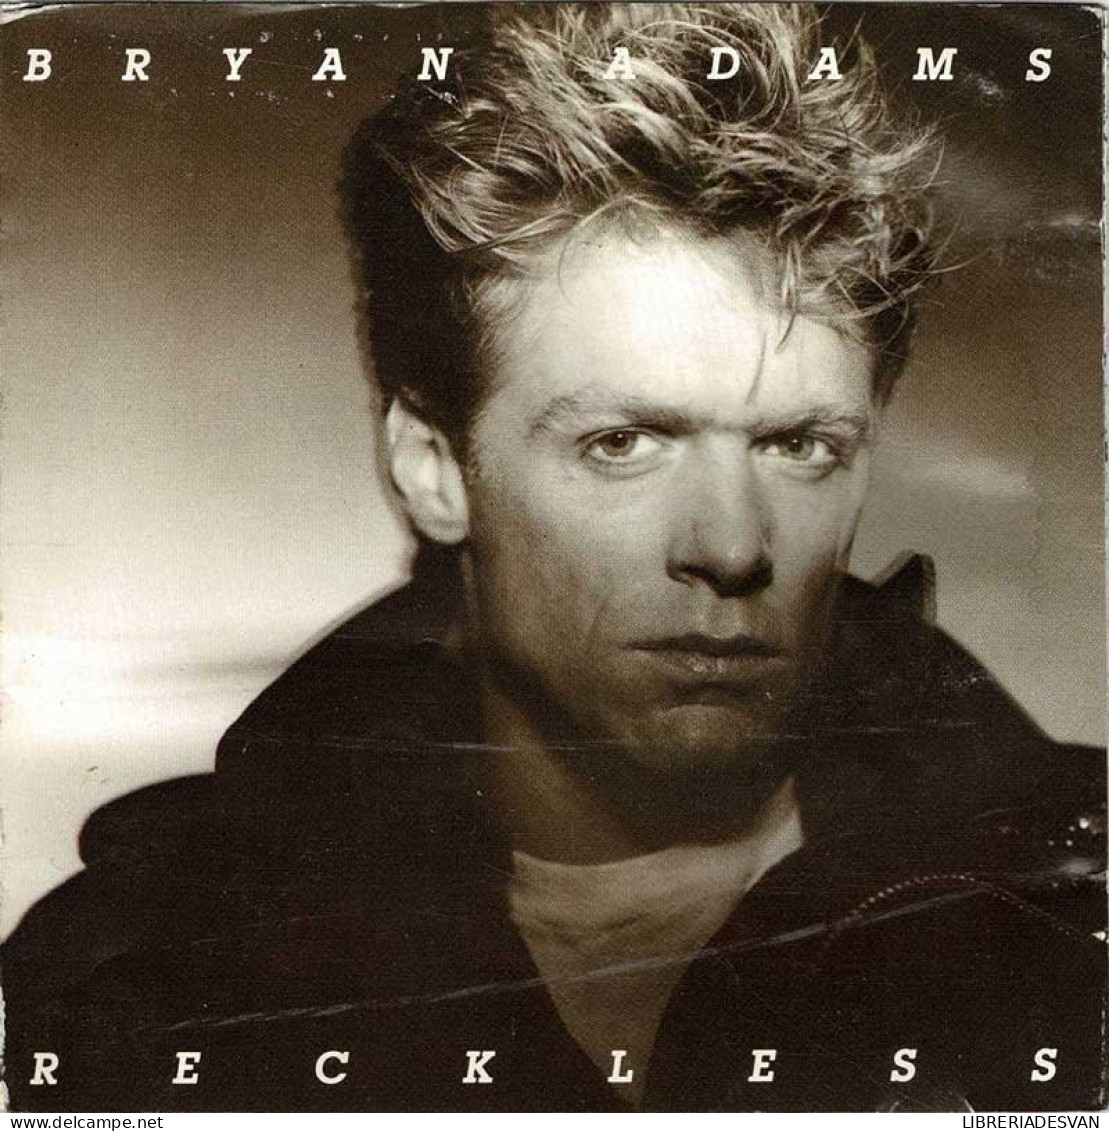 Bryan Adams - Reckless. CD - Country & Folk